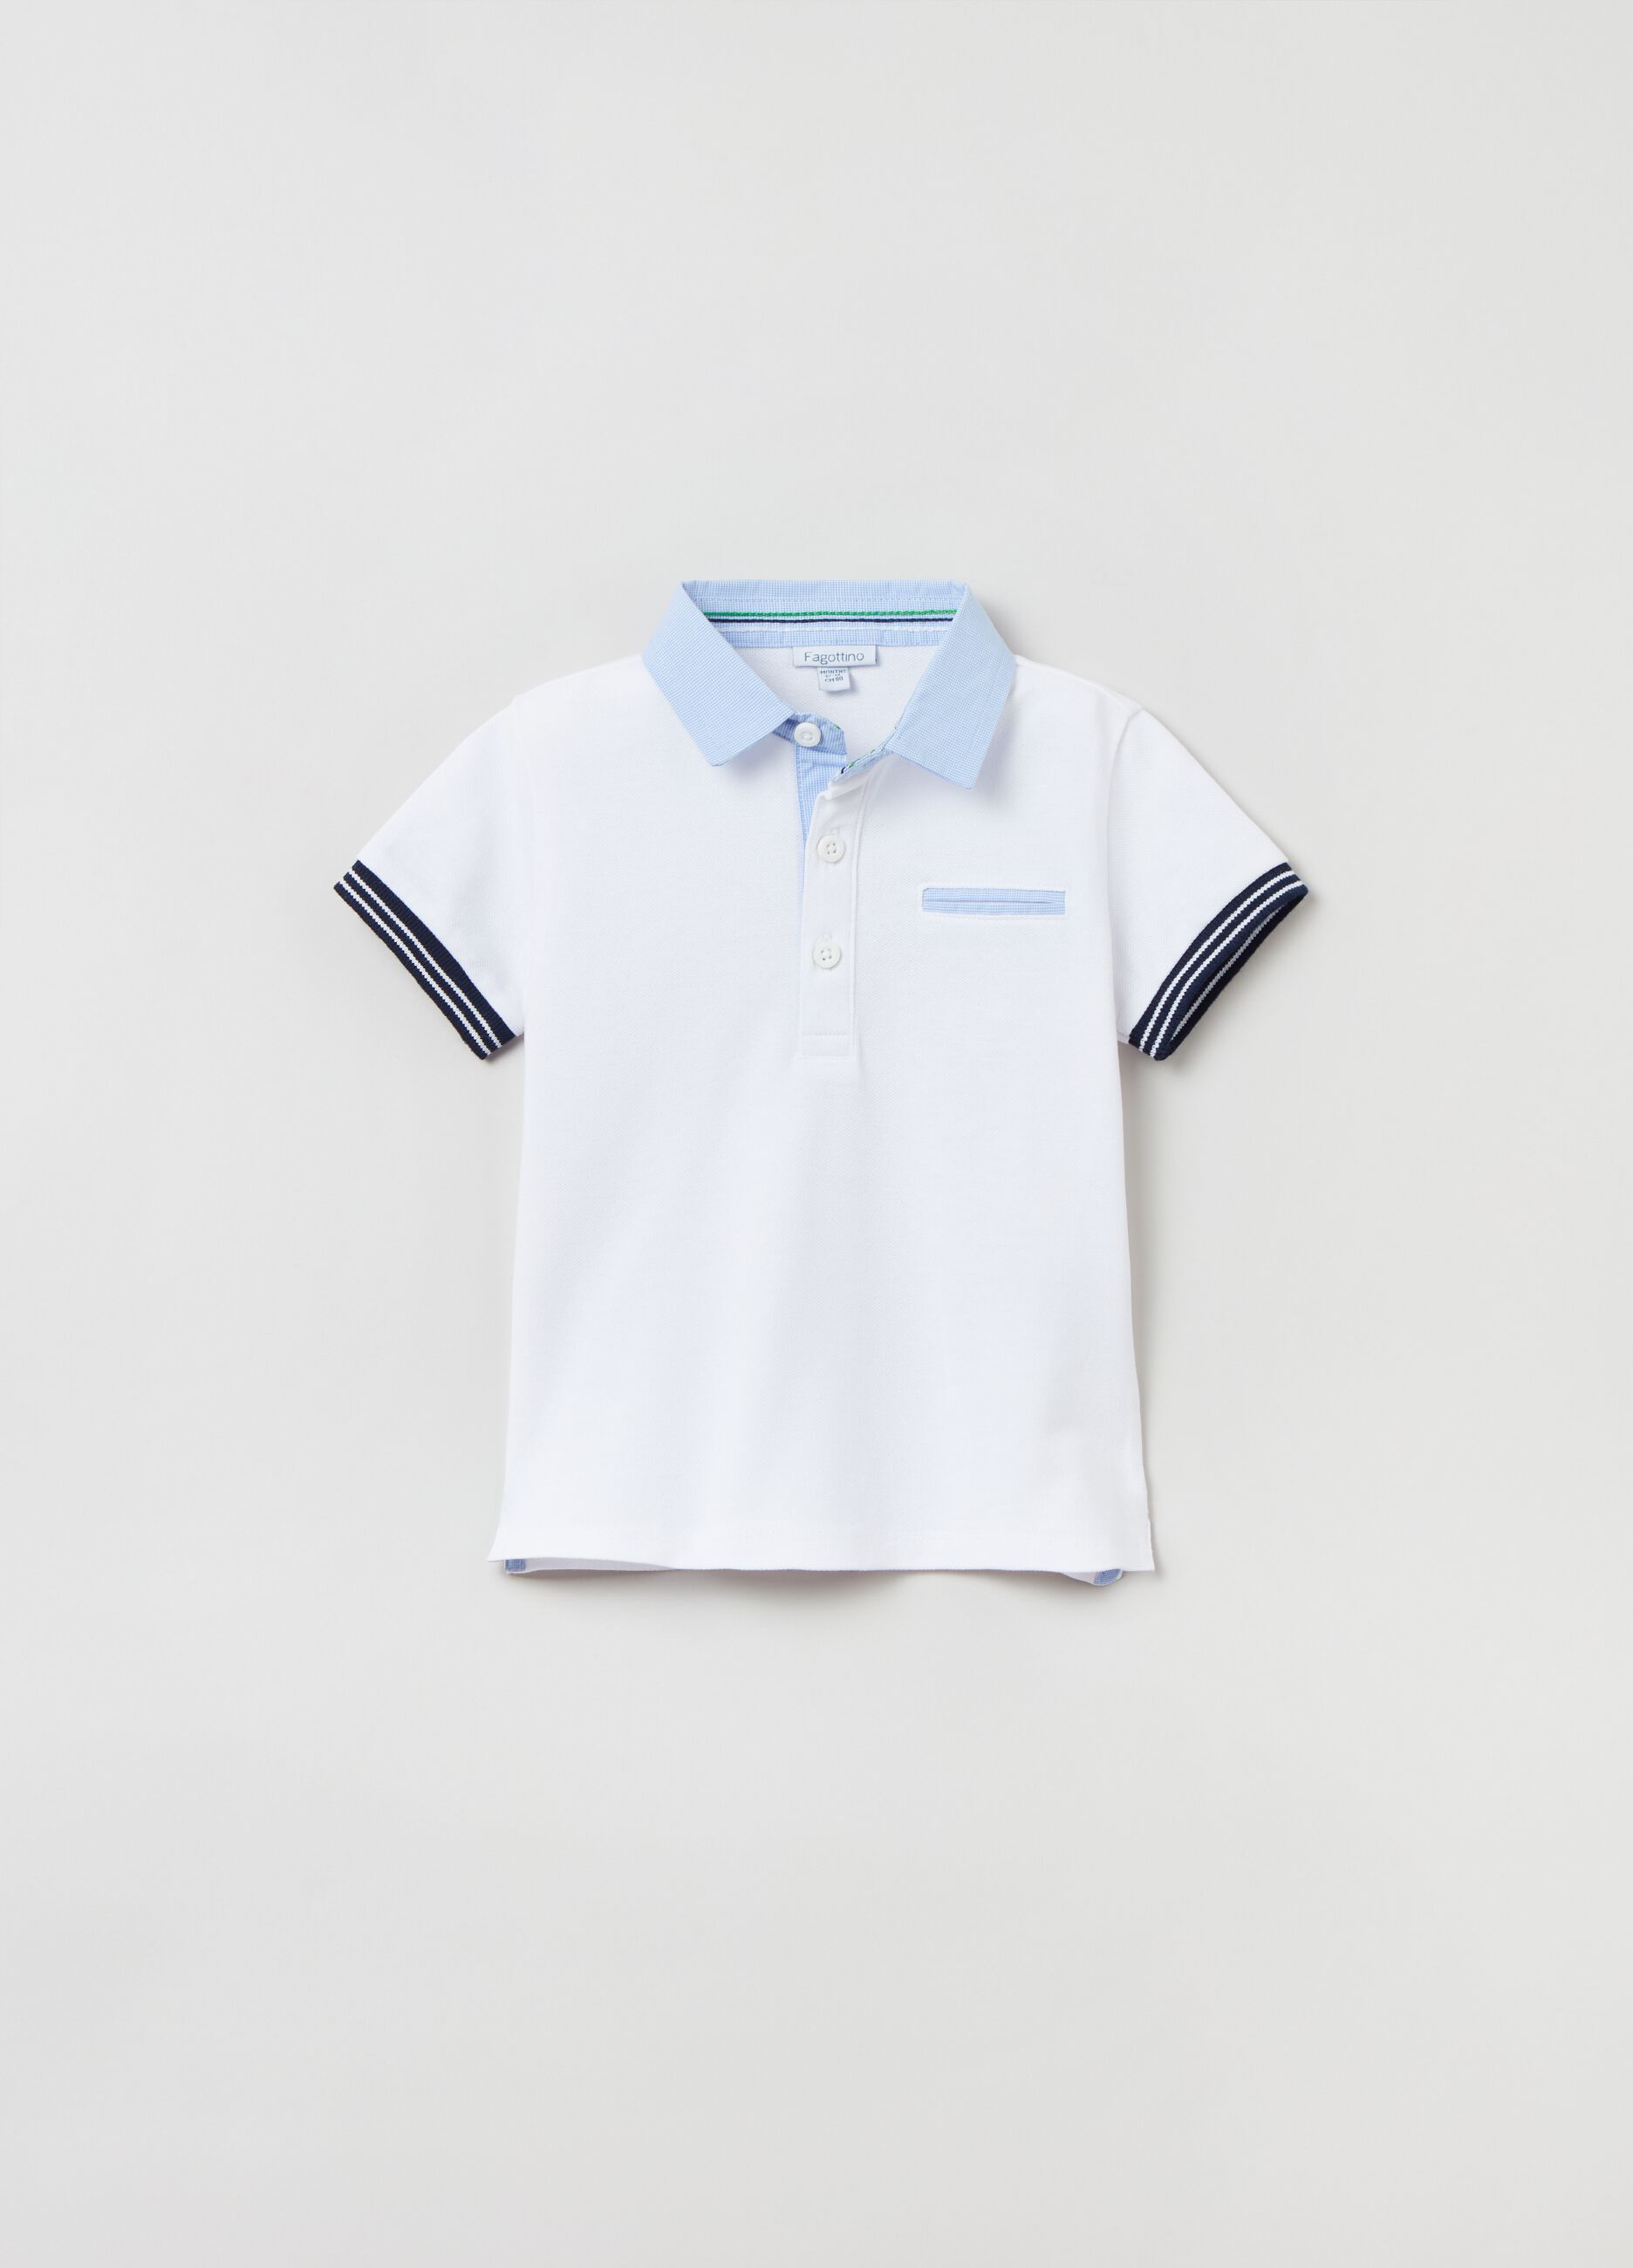 Stretch cotton piquet polo shirt with pocket